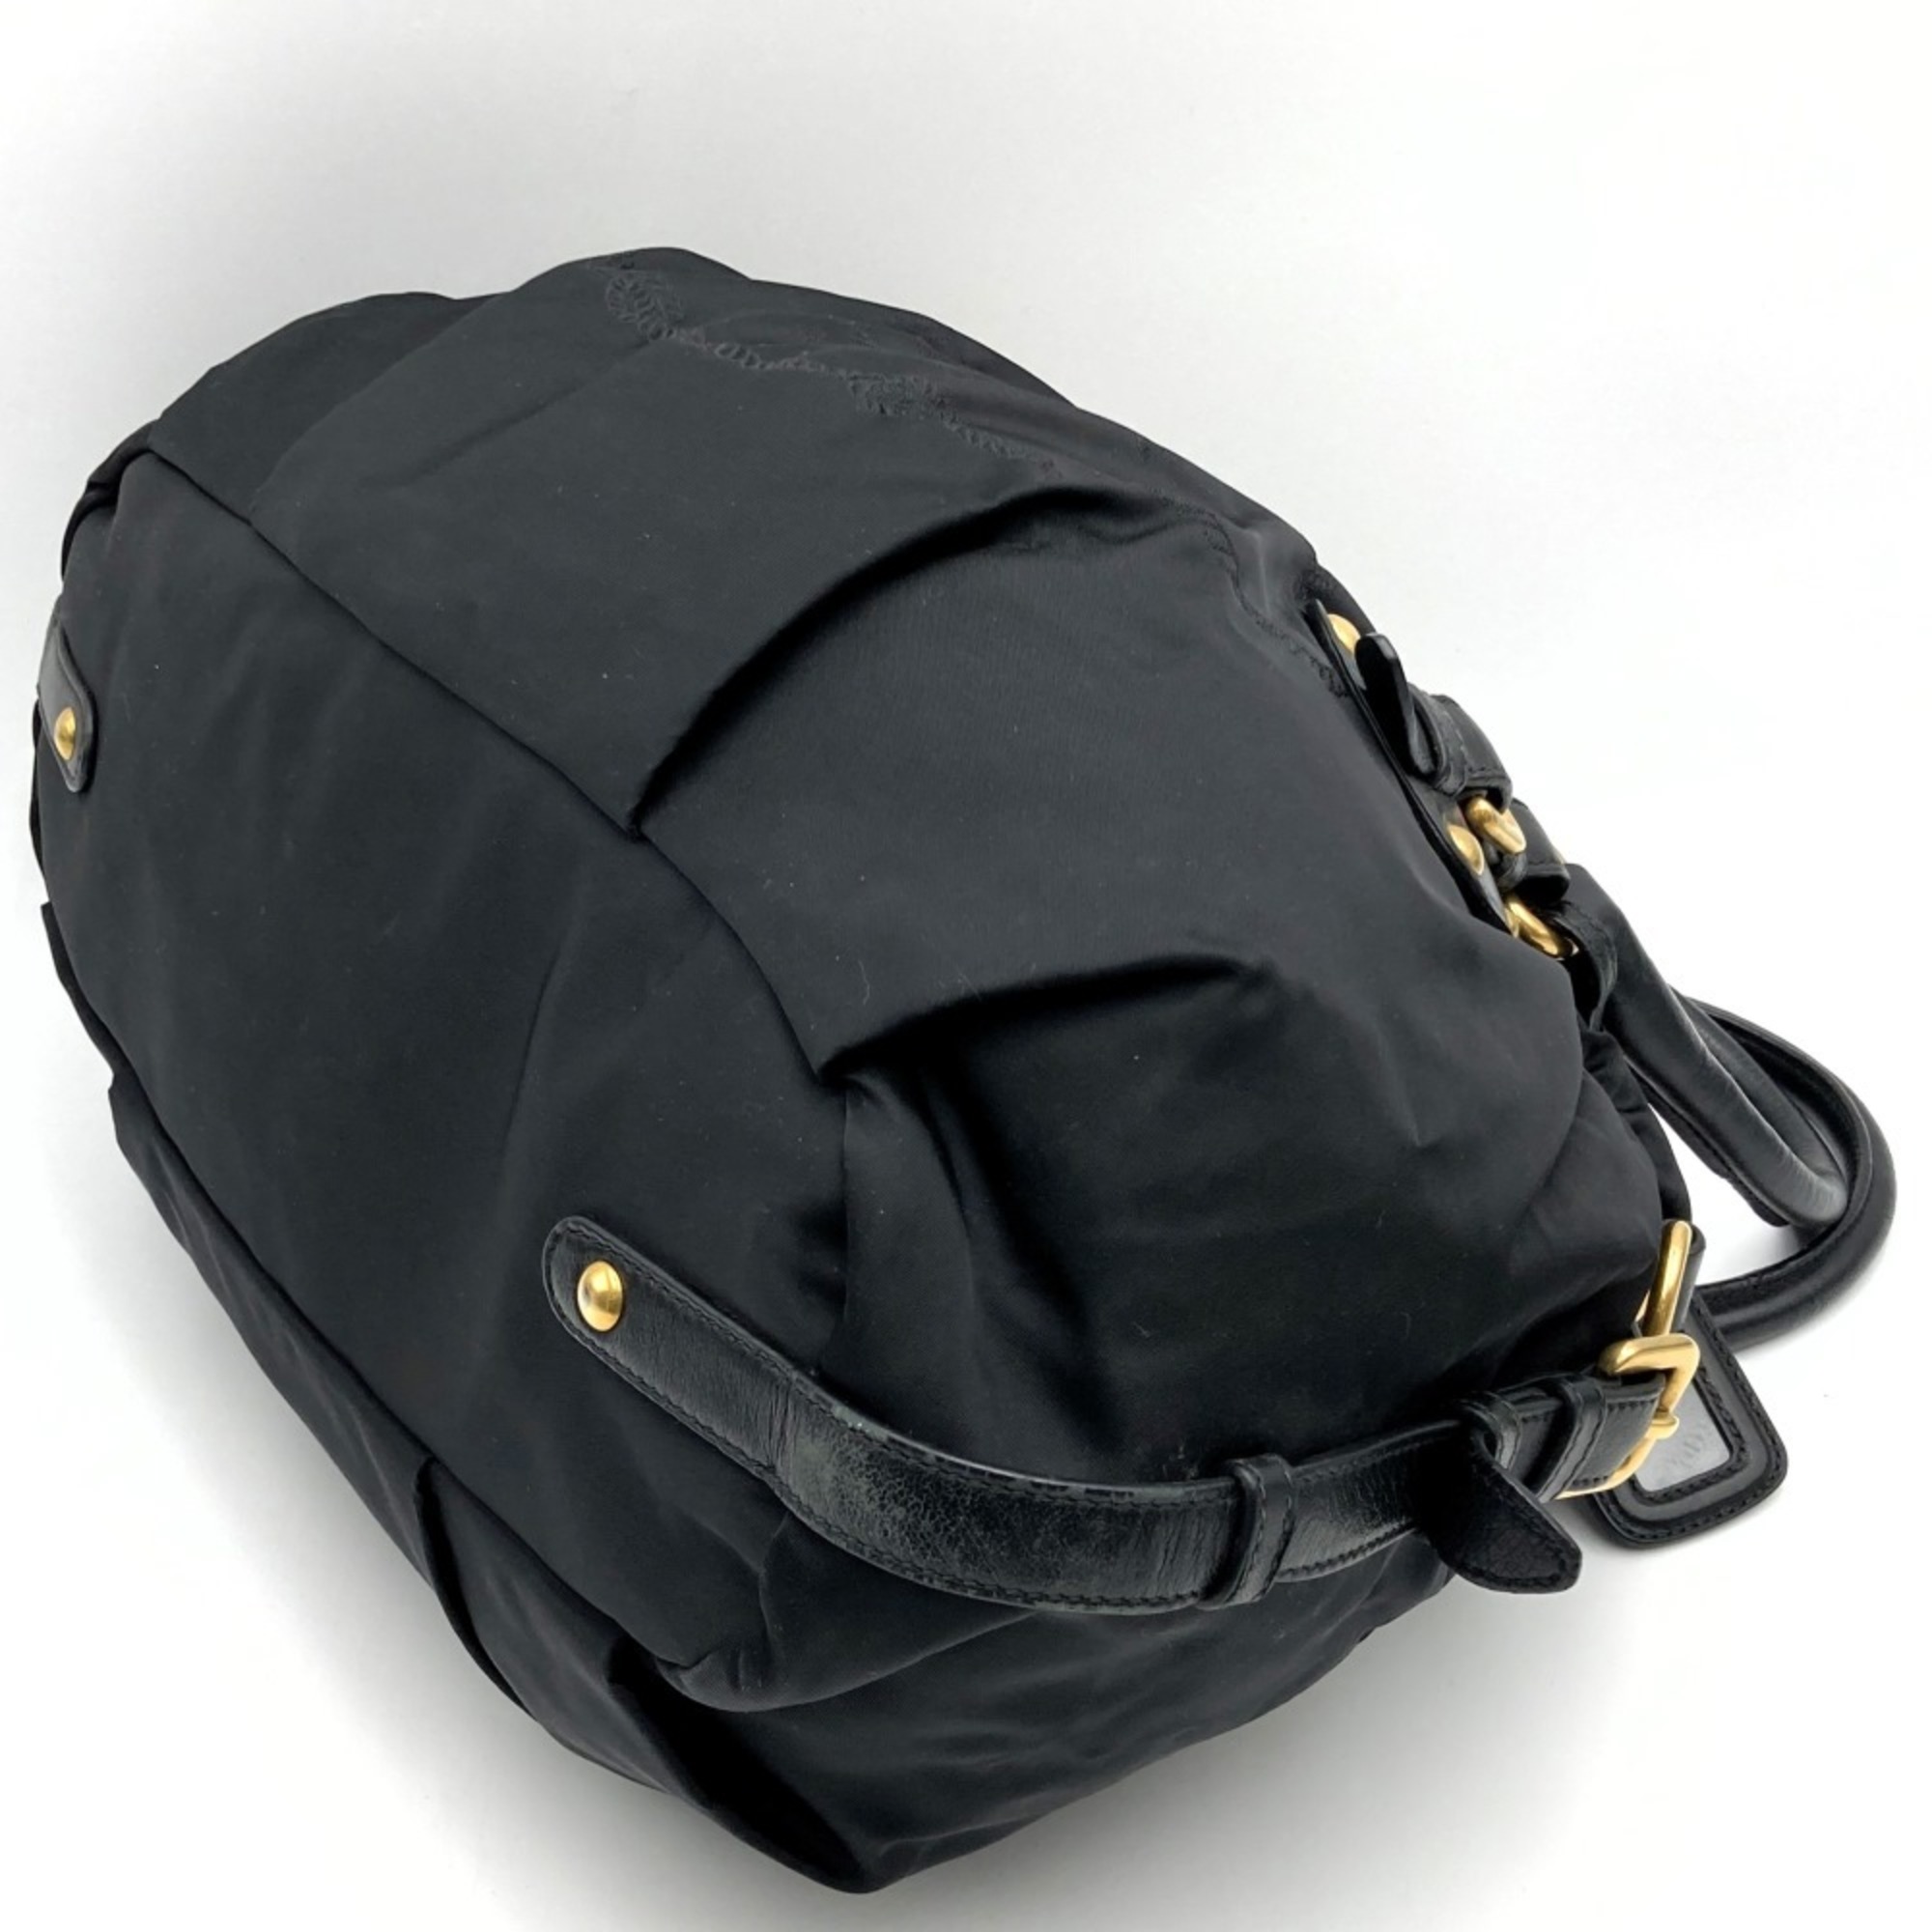 Prada handbag, gathered, embroidered, black, nylon, leather, women's, PRADA